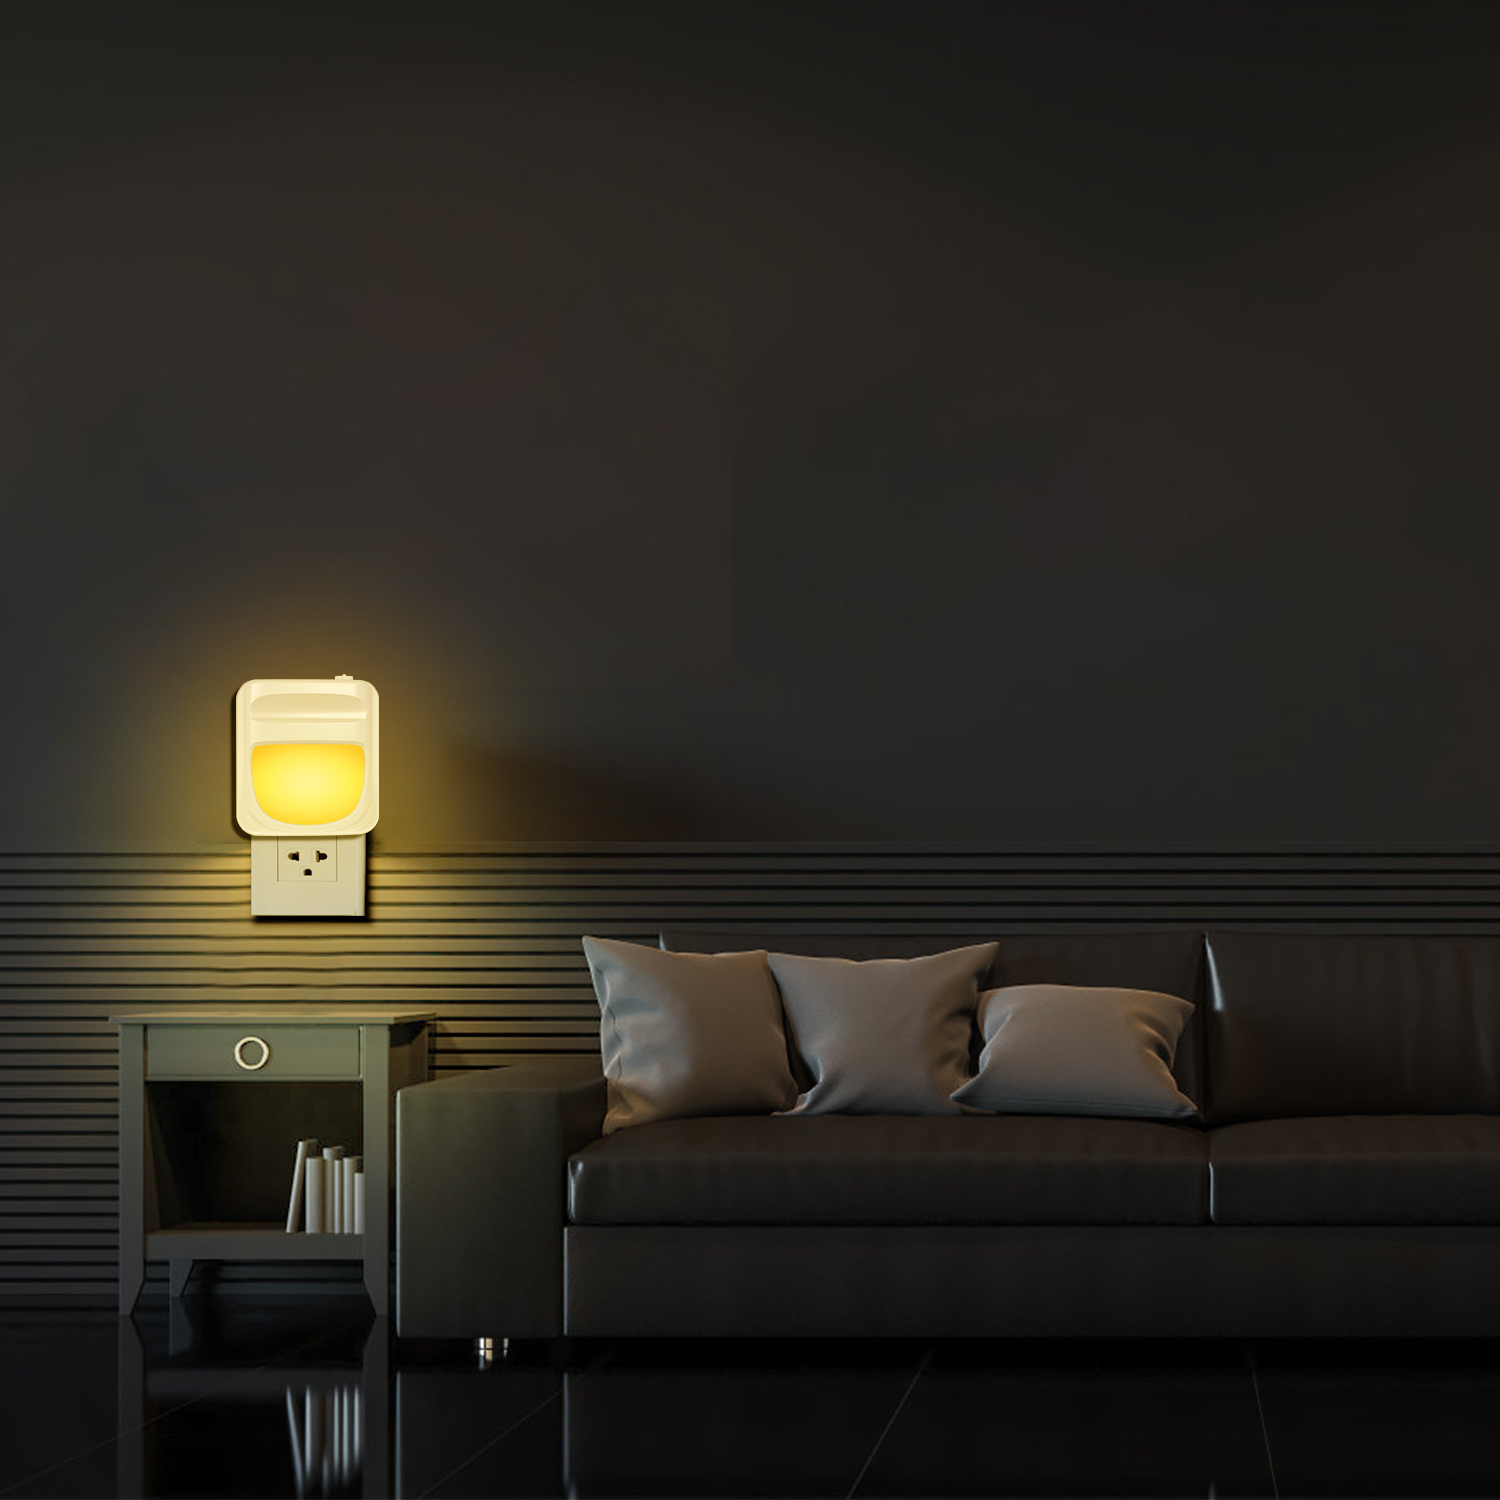 1636-LED-Night-Light-Intelligent-Control-Plug-In-Night-Light-Home-Decor-Lamp-1538235-4